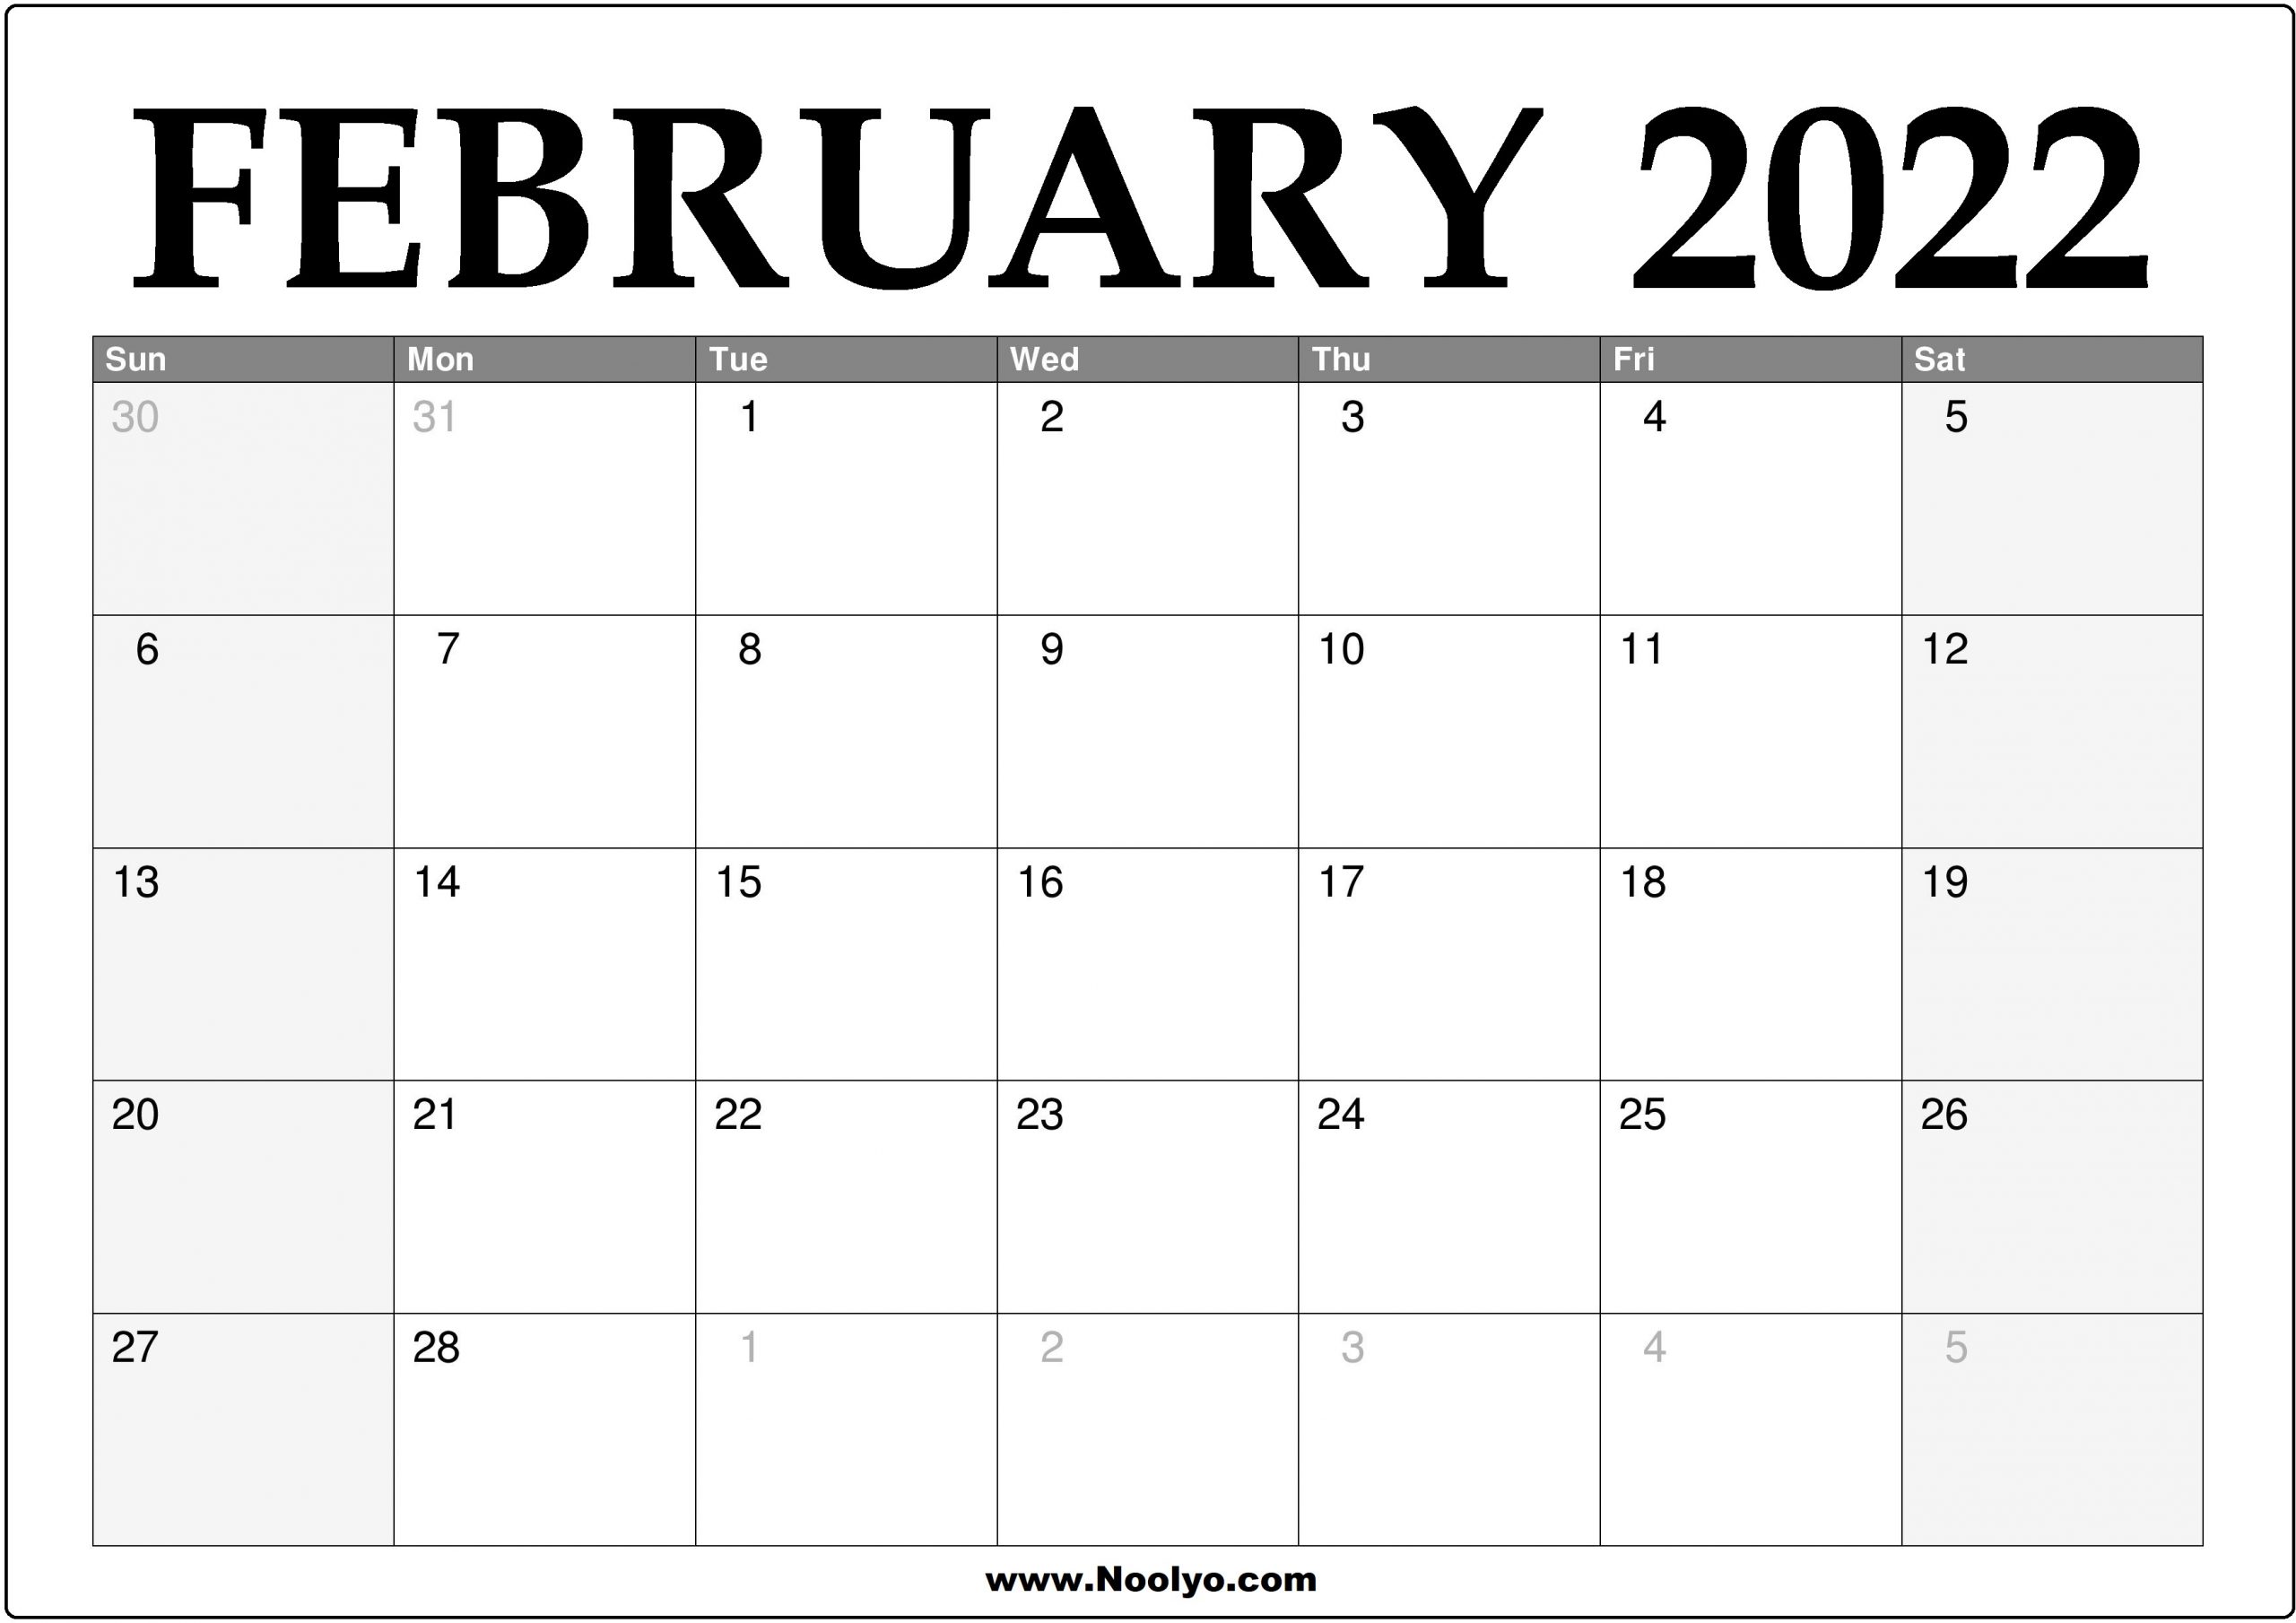 2022 February Calendar Printable - Download Free - Noolyo